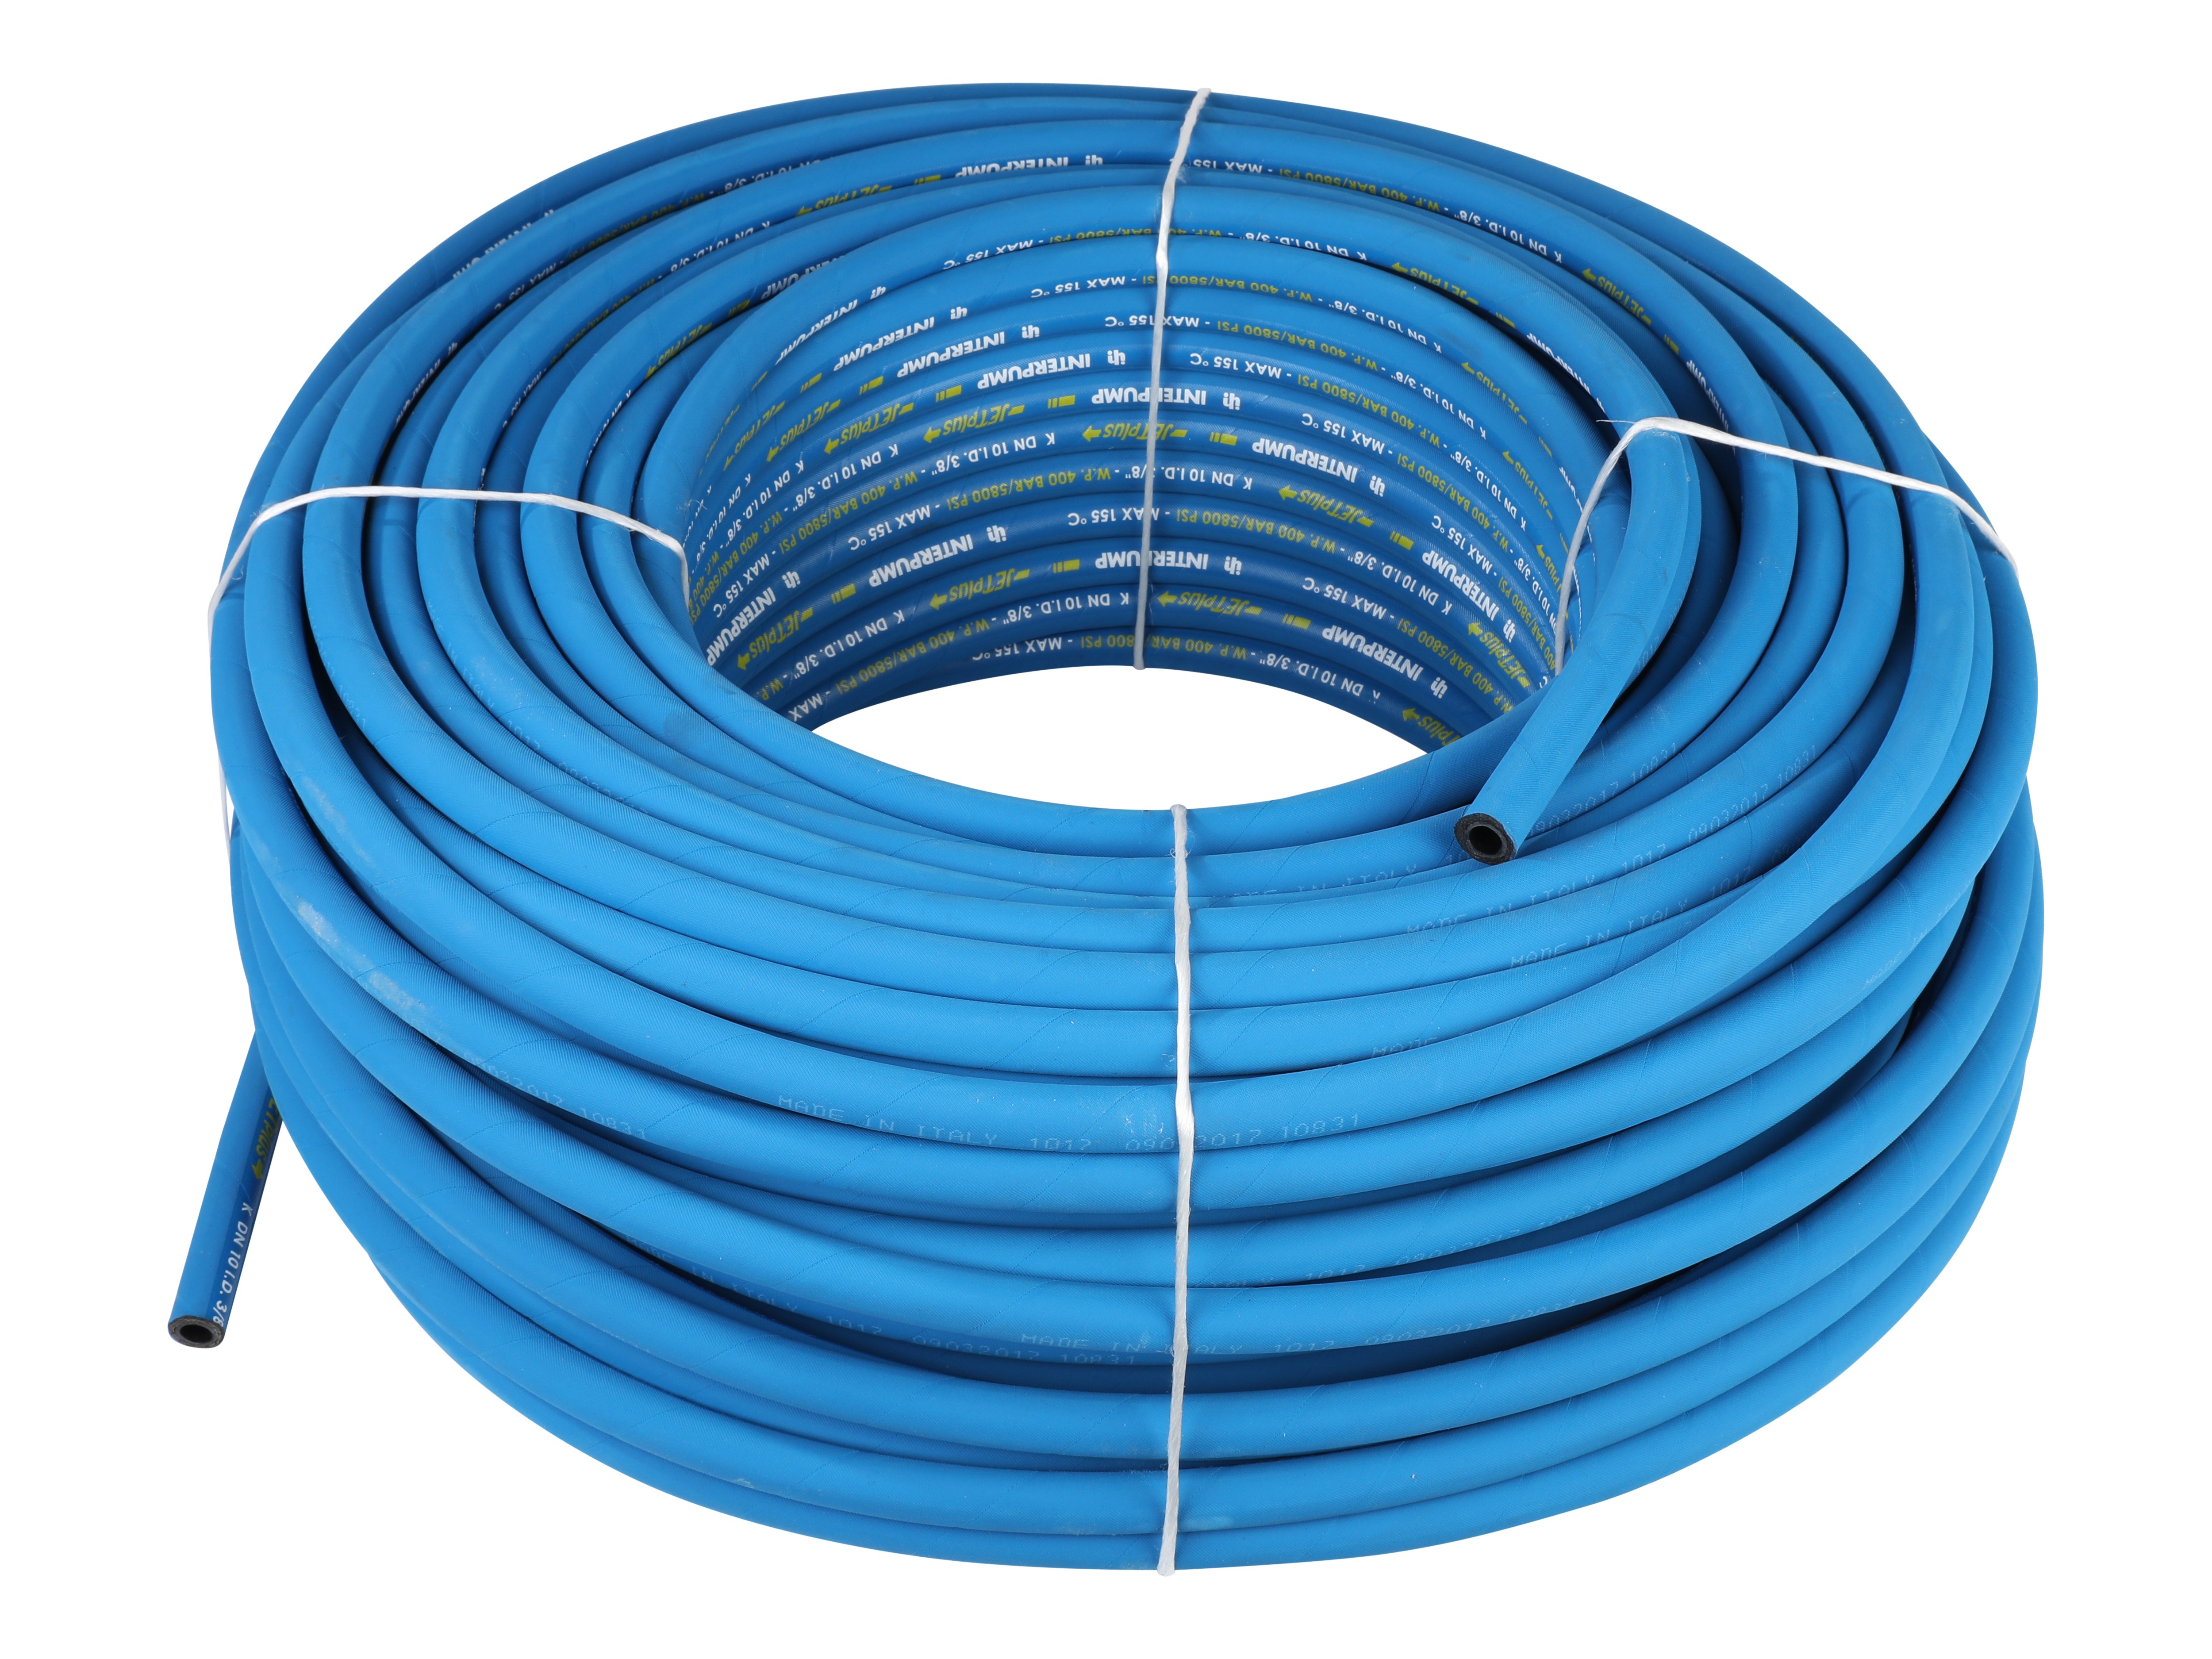 Hose reel • 3/8 x 30m high pressure rubber hose • 330 bar